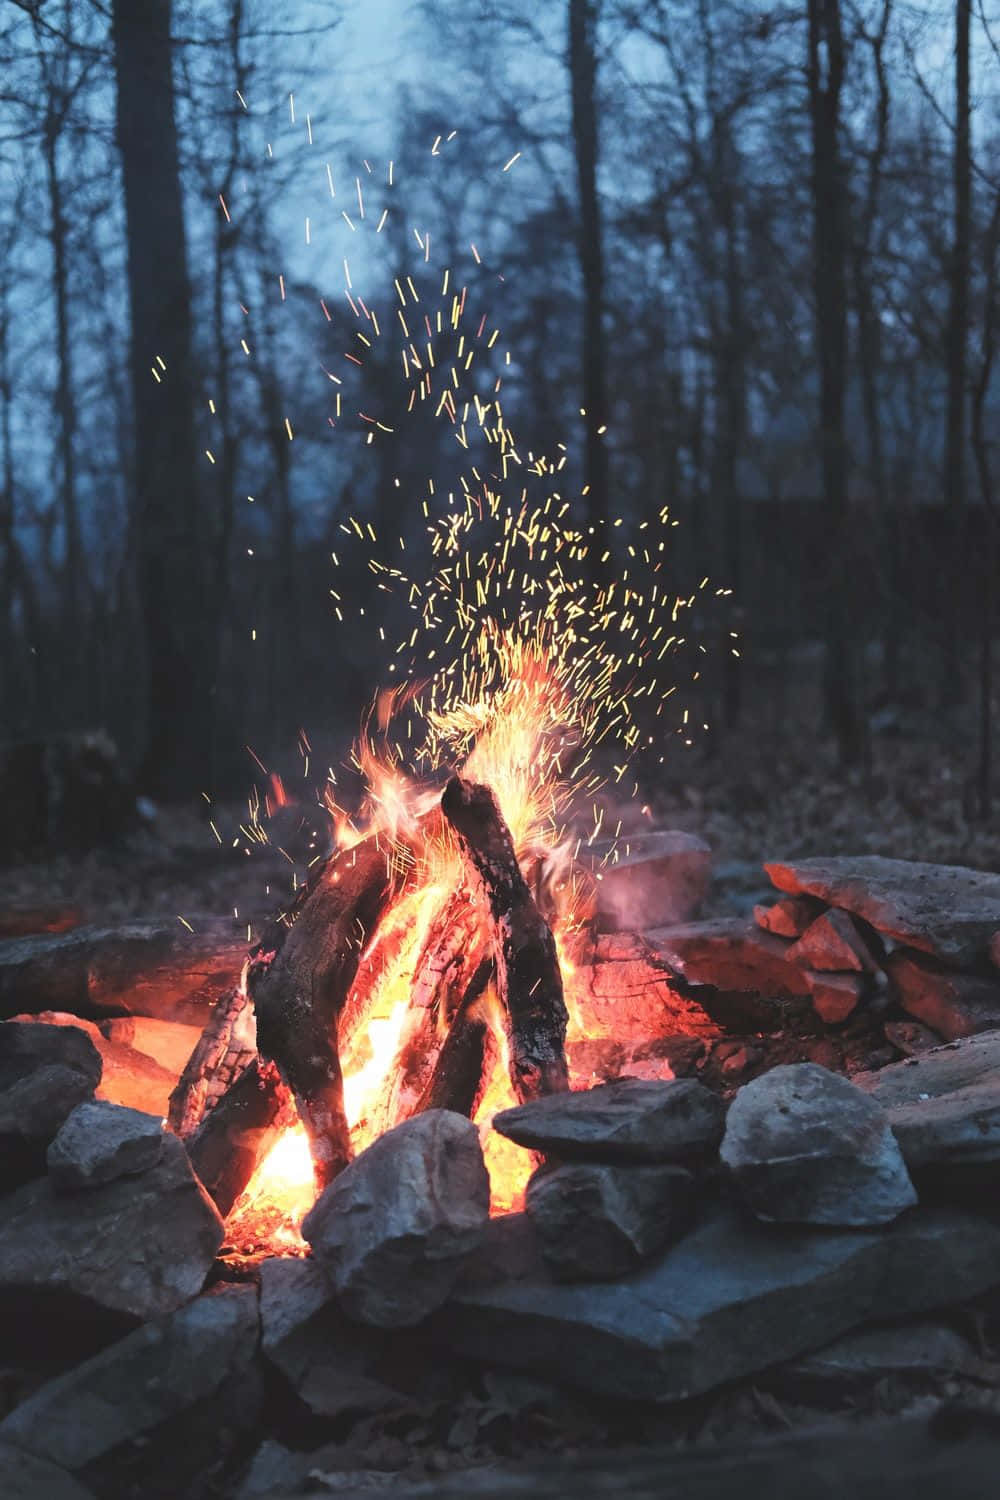 A cozy campfire under a starlit sky